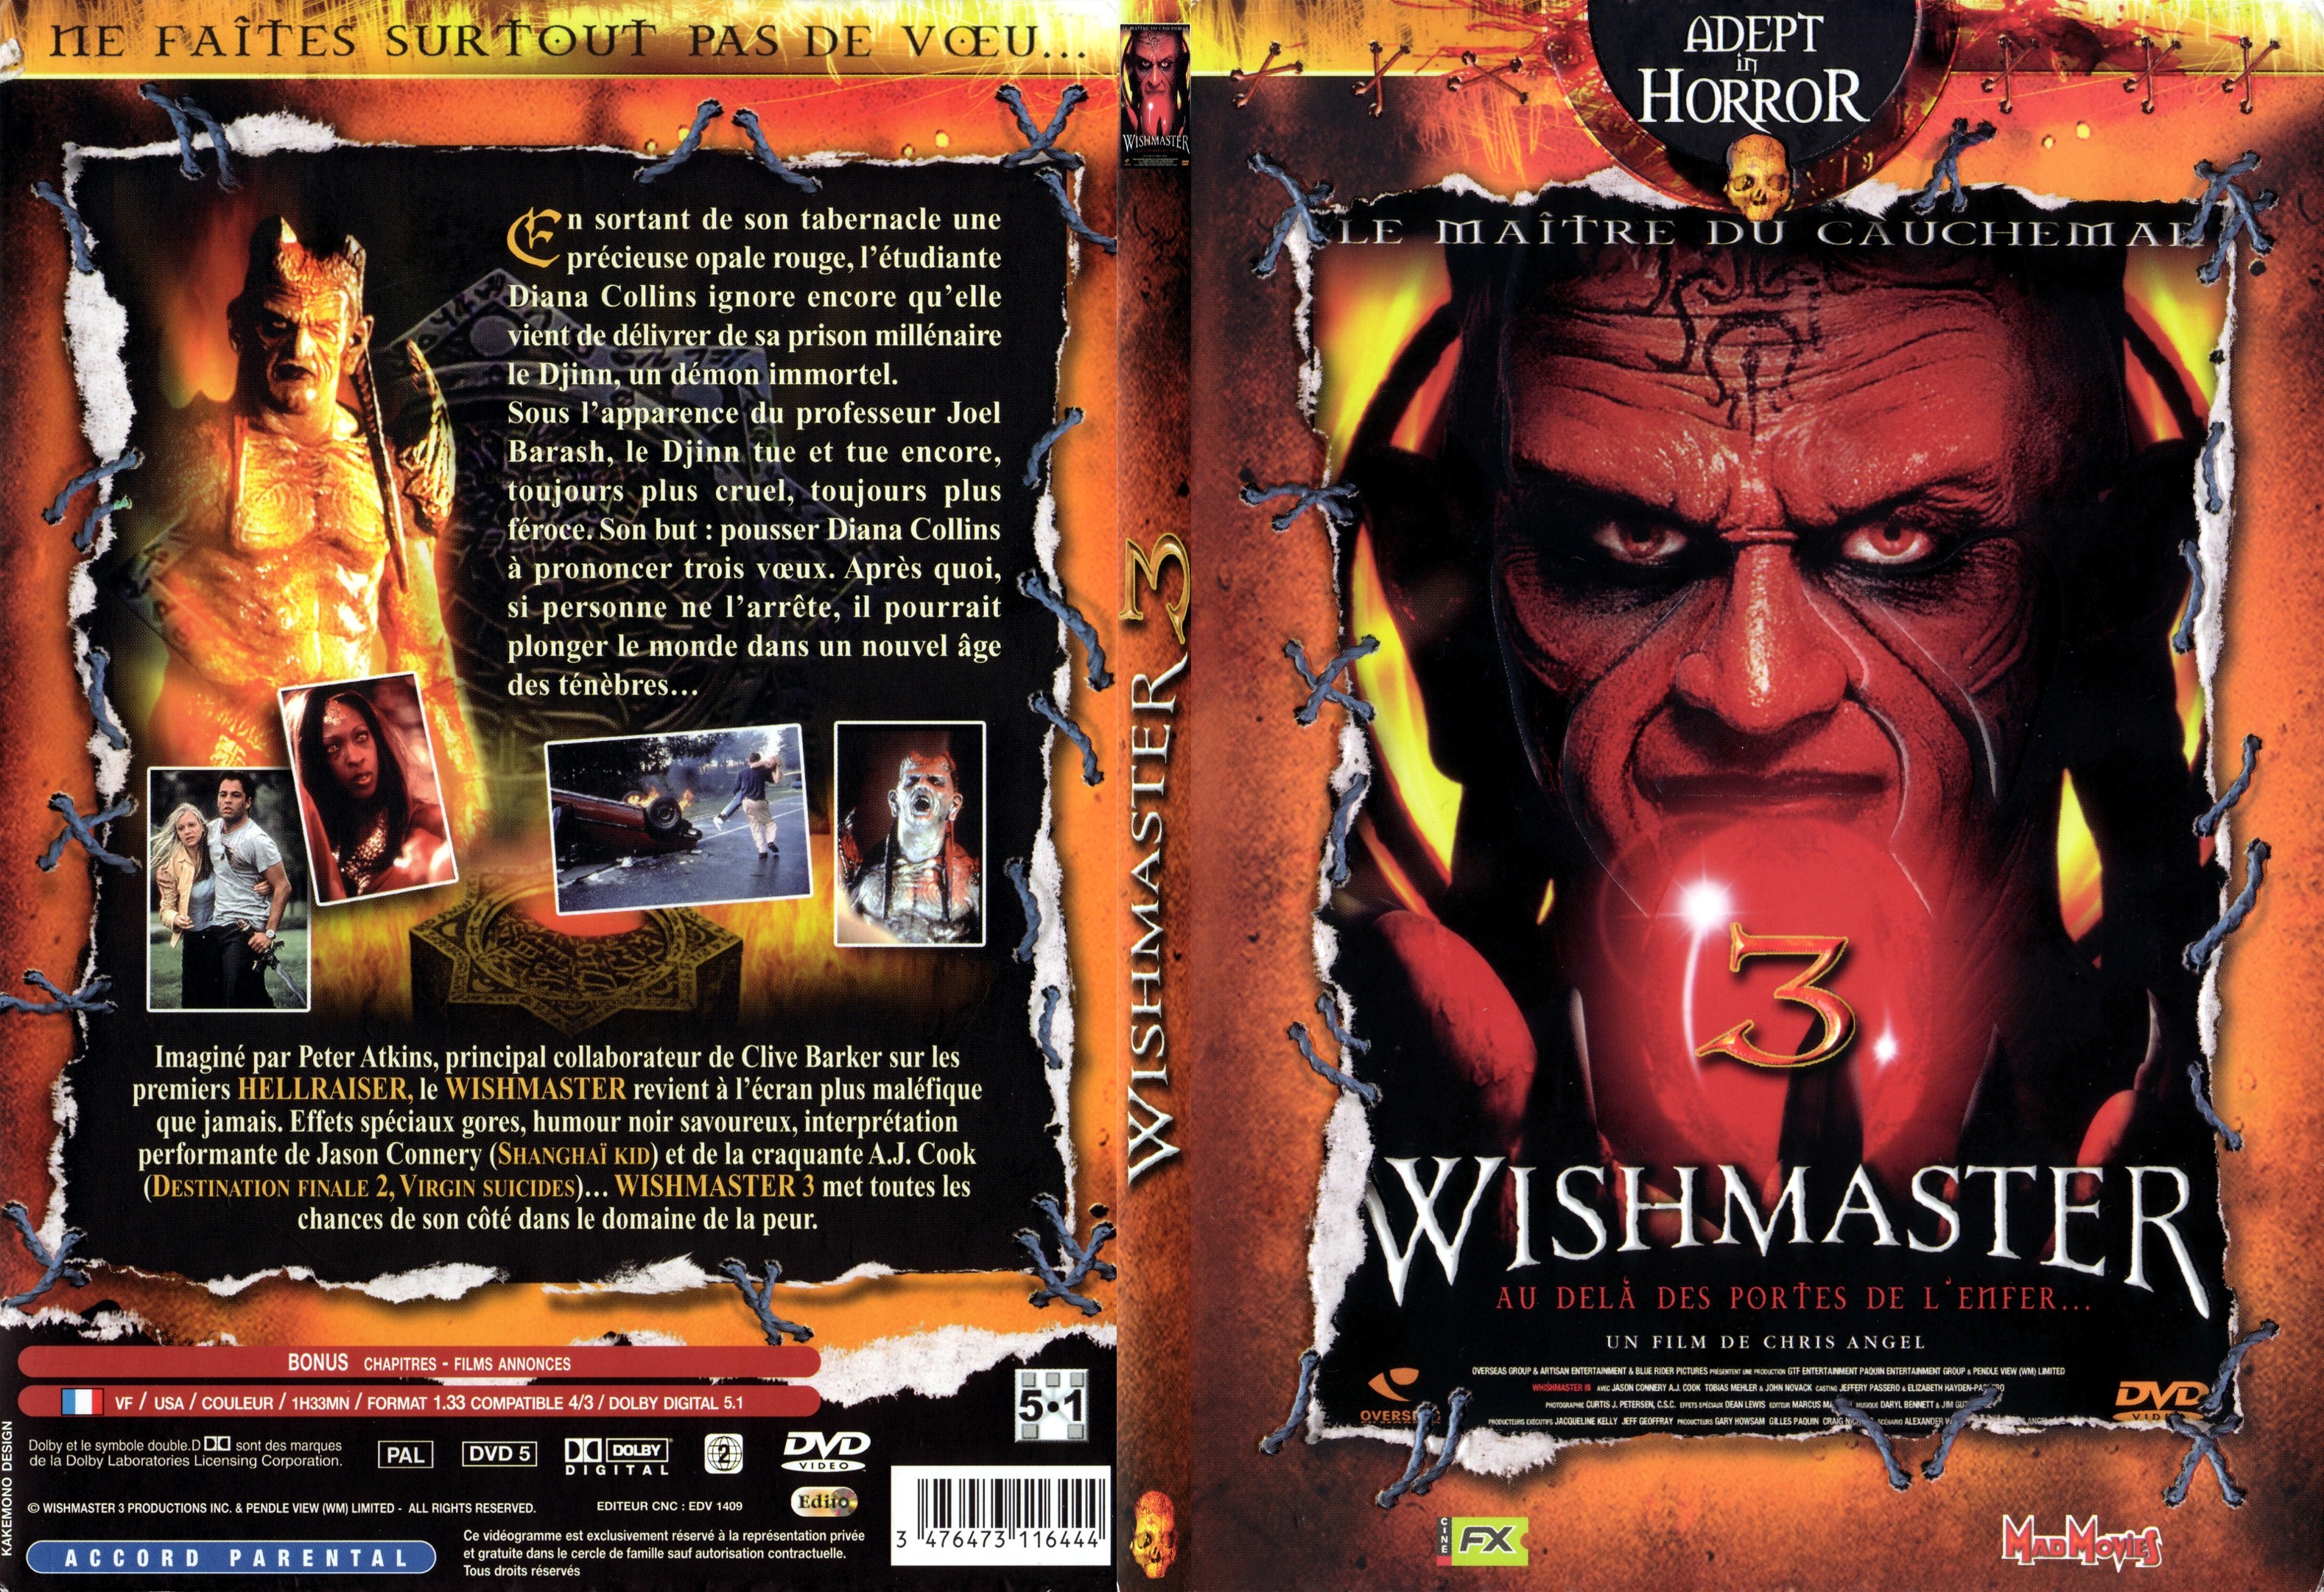 Jaquette DVD Wishmaster 3 - SLIM v2